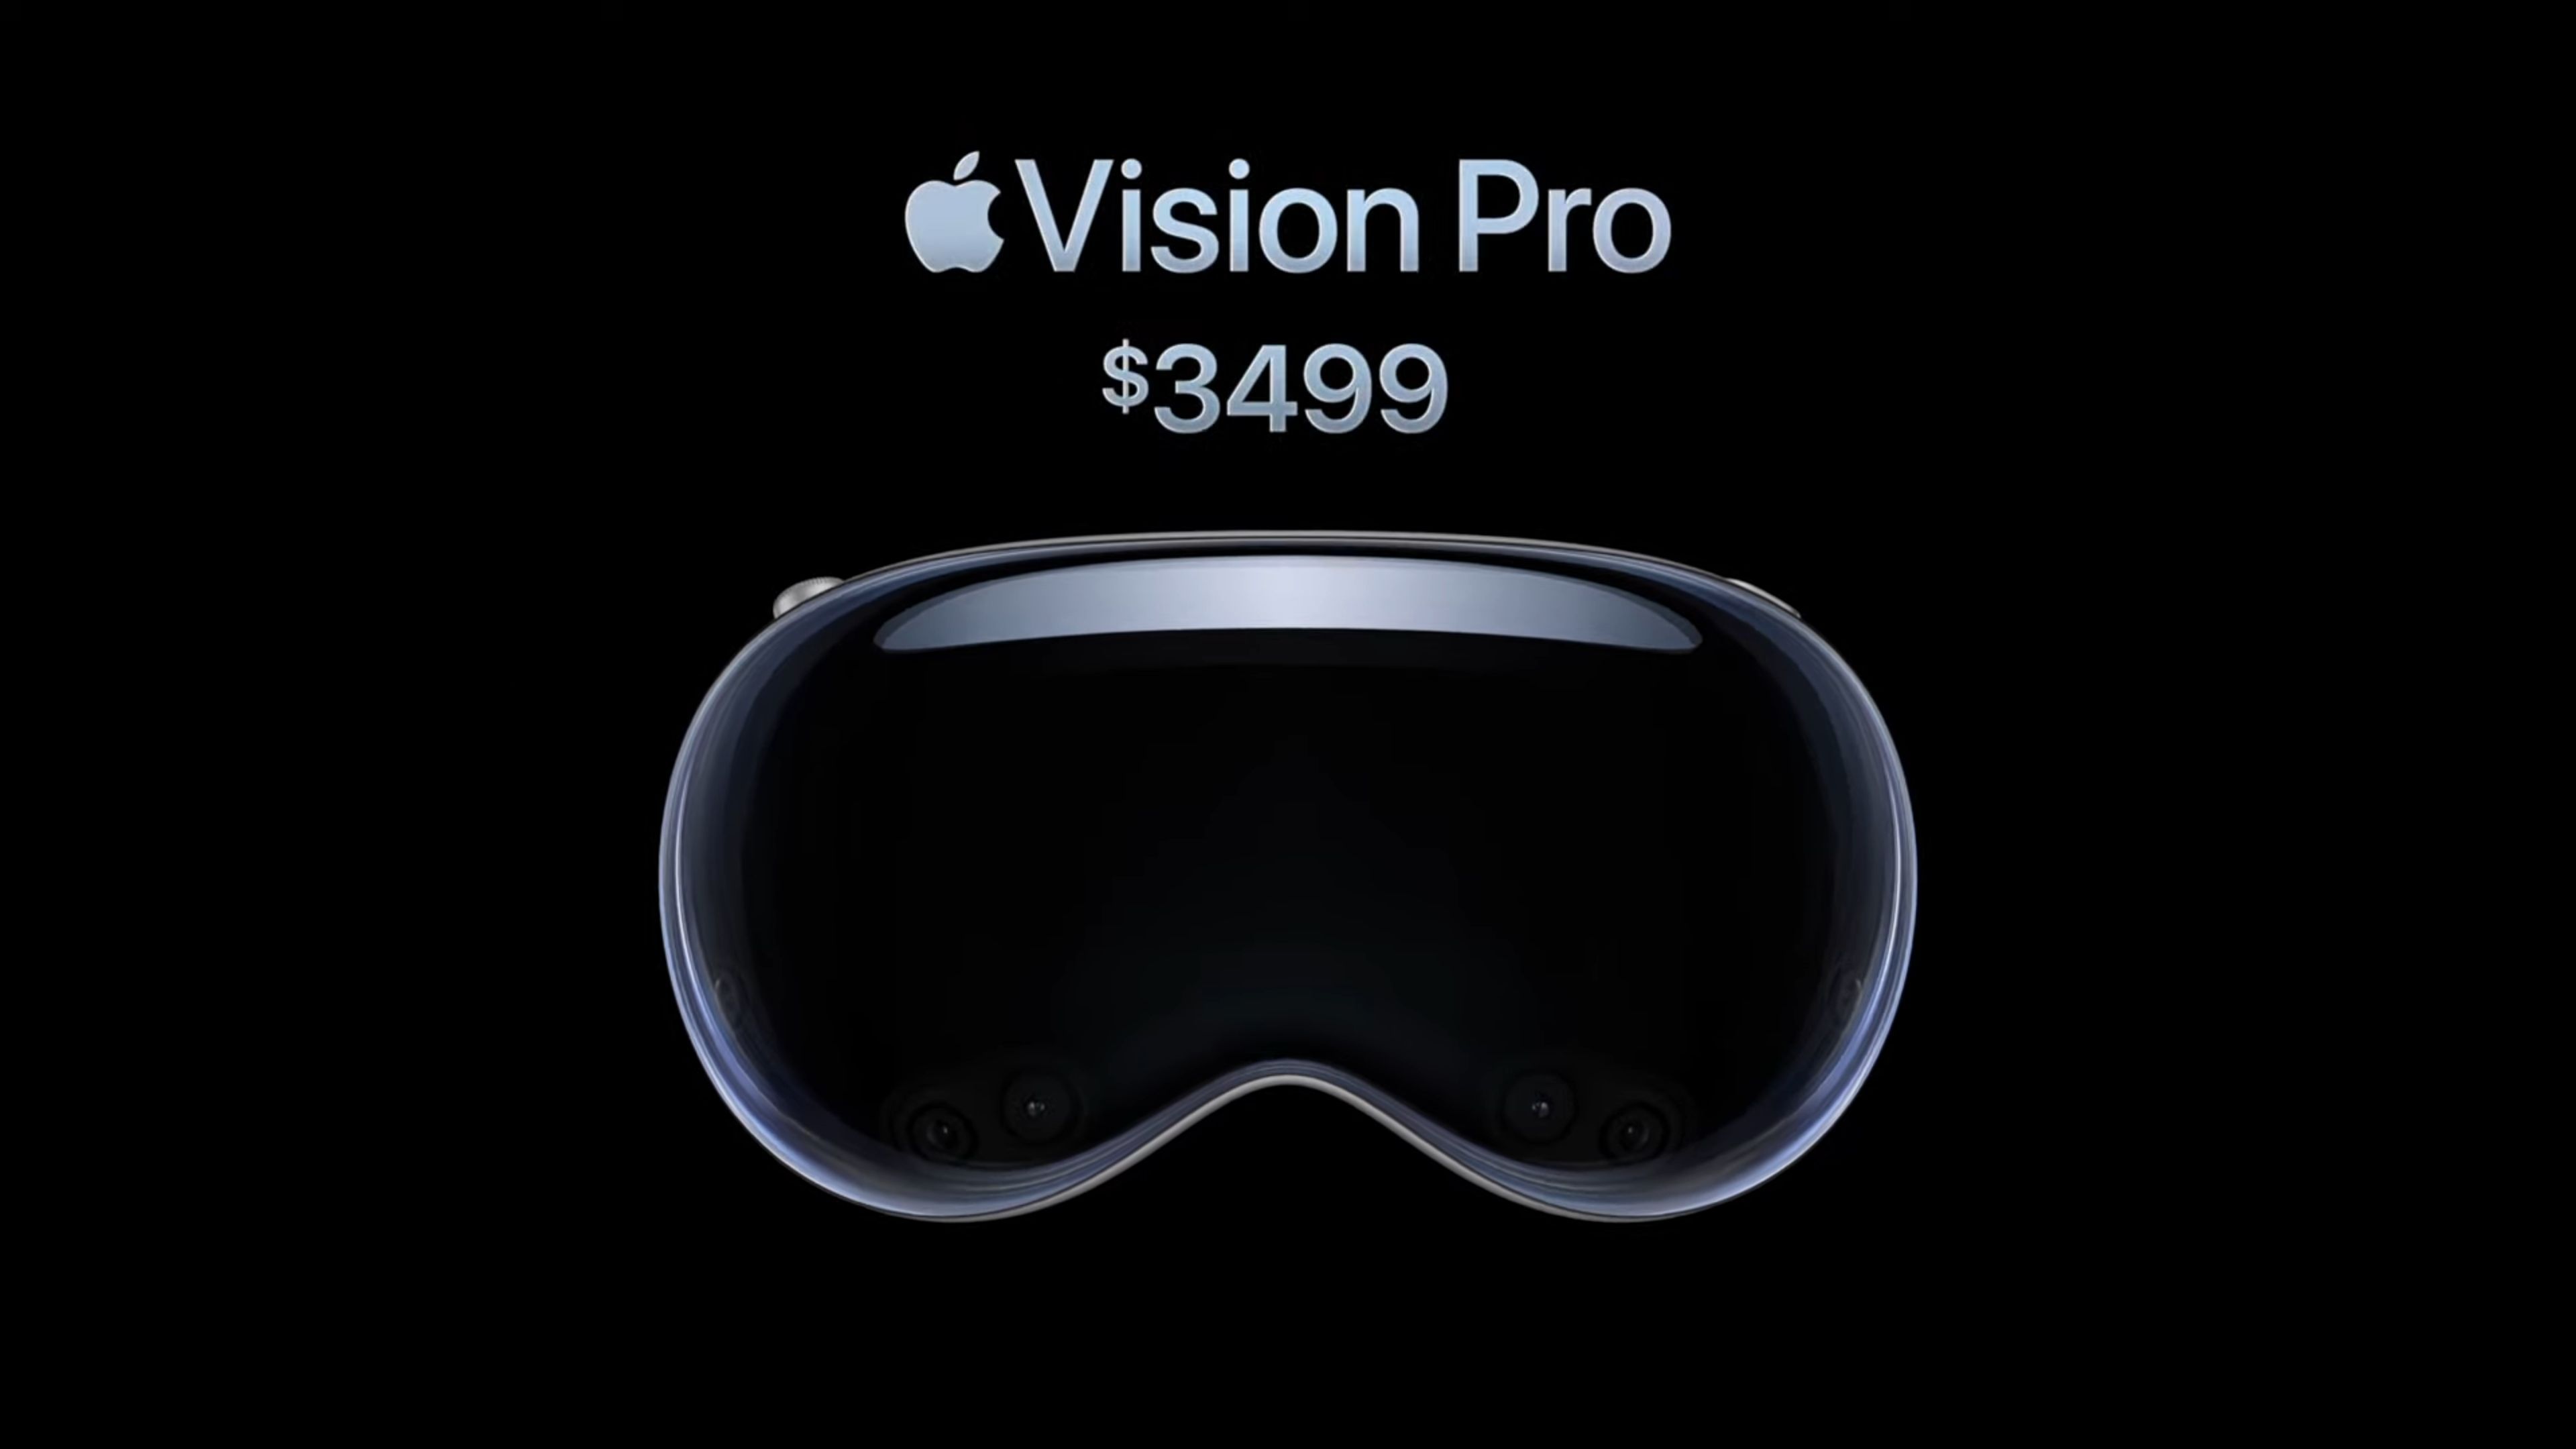 Apple Vision Pro Price